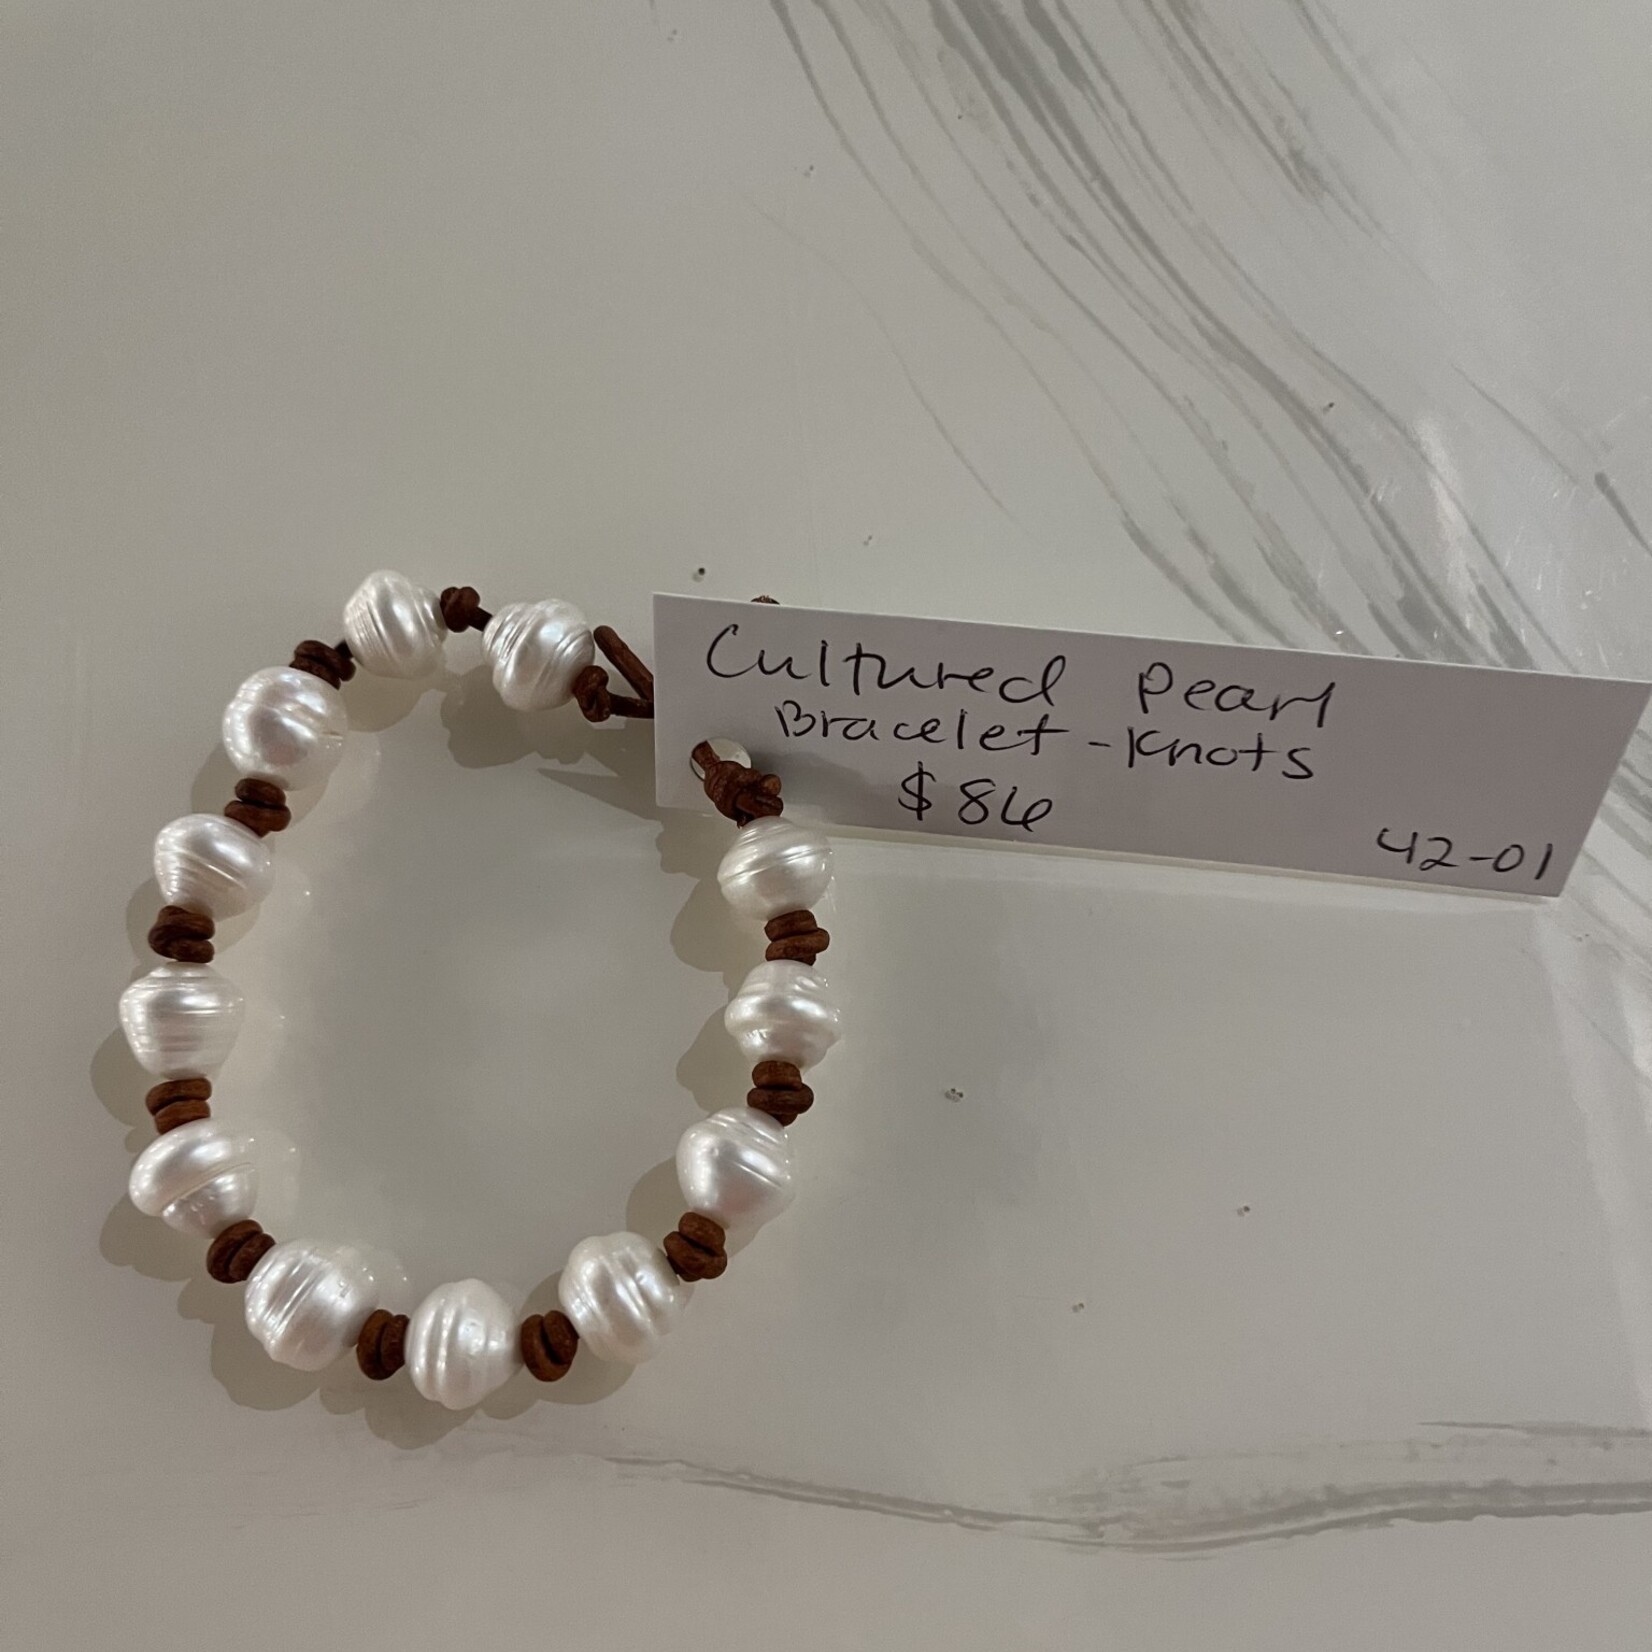 Alecia Bristow Cultured Pearl Bracelet - Knots Single Strand